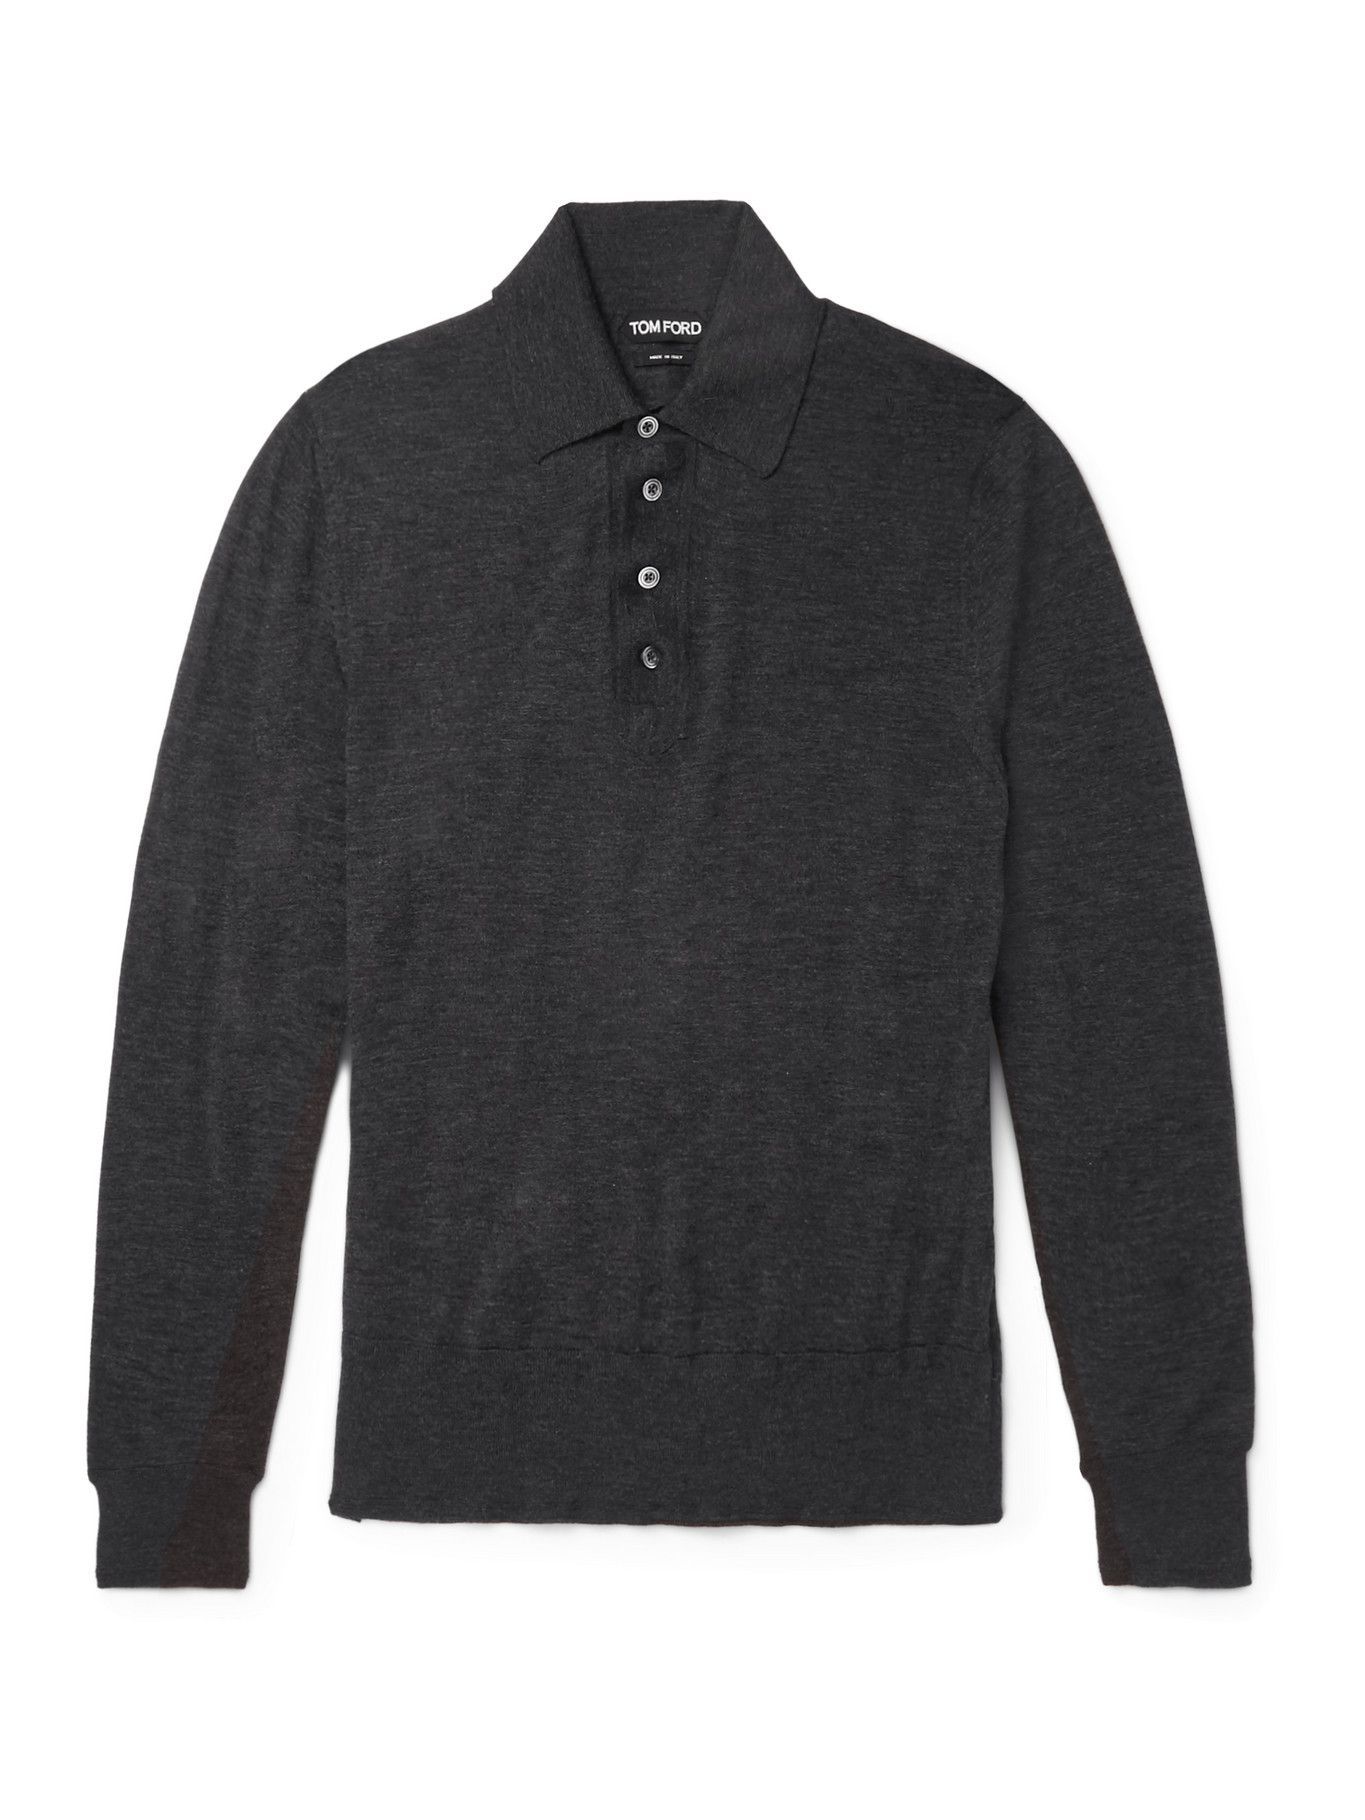 TOM FORD - Slim-Fit Cashmere Polo Shirt - Gray TOM FORD